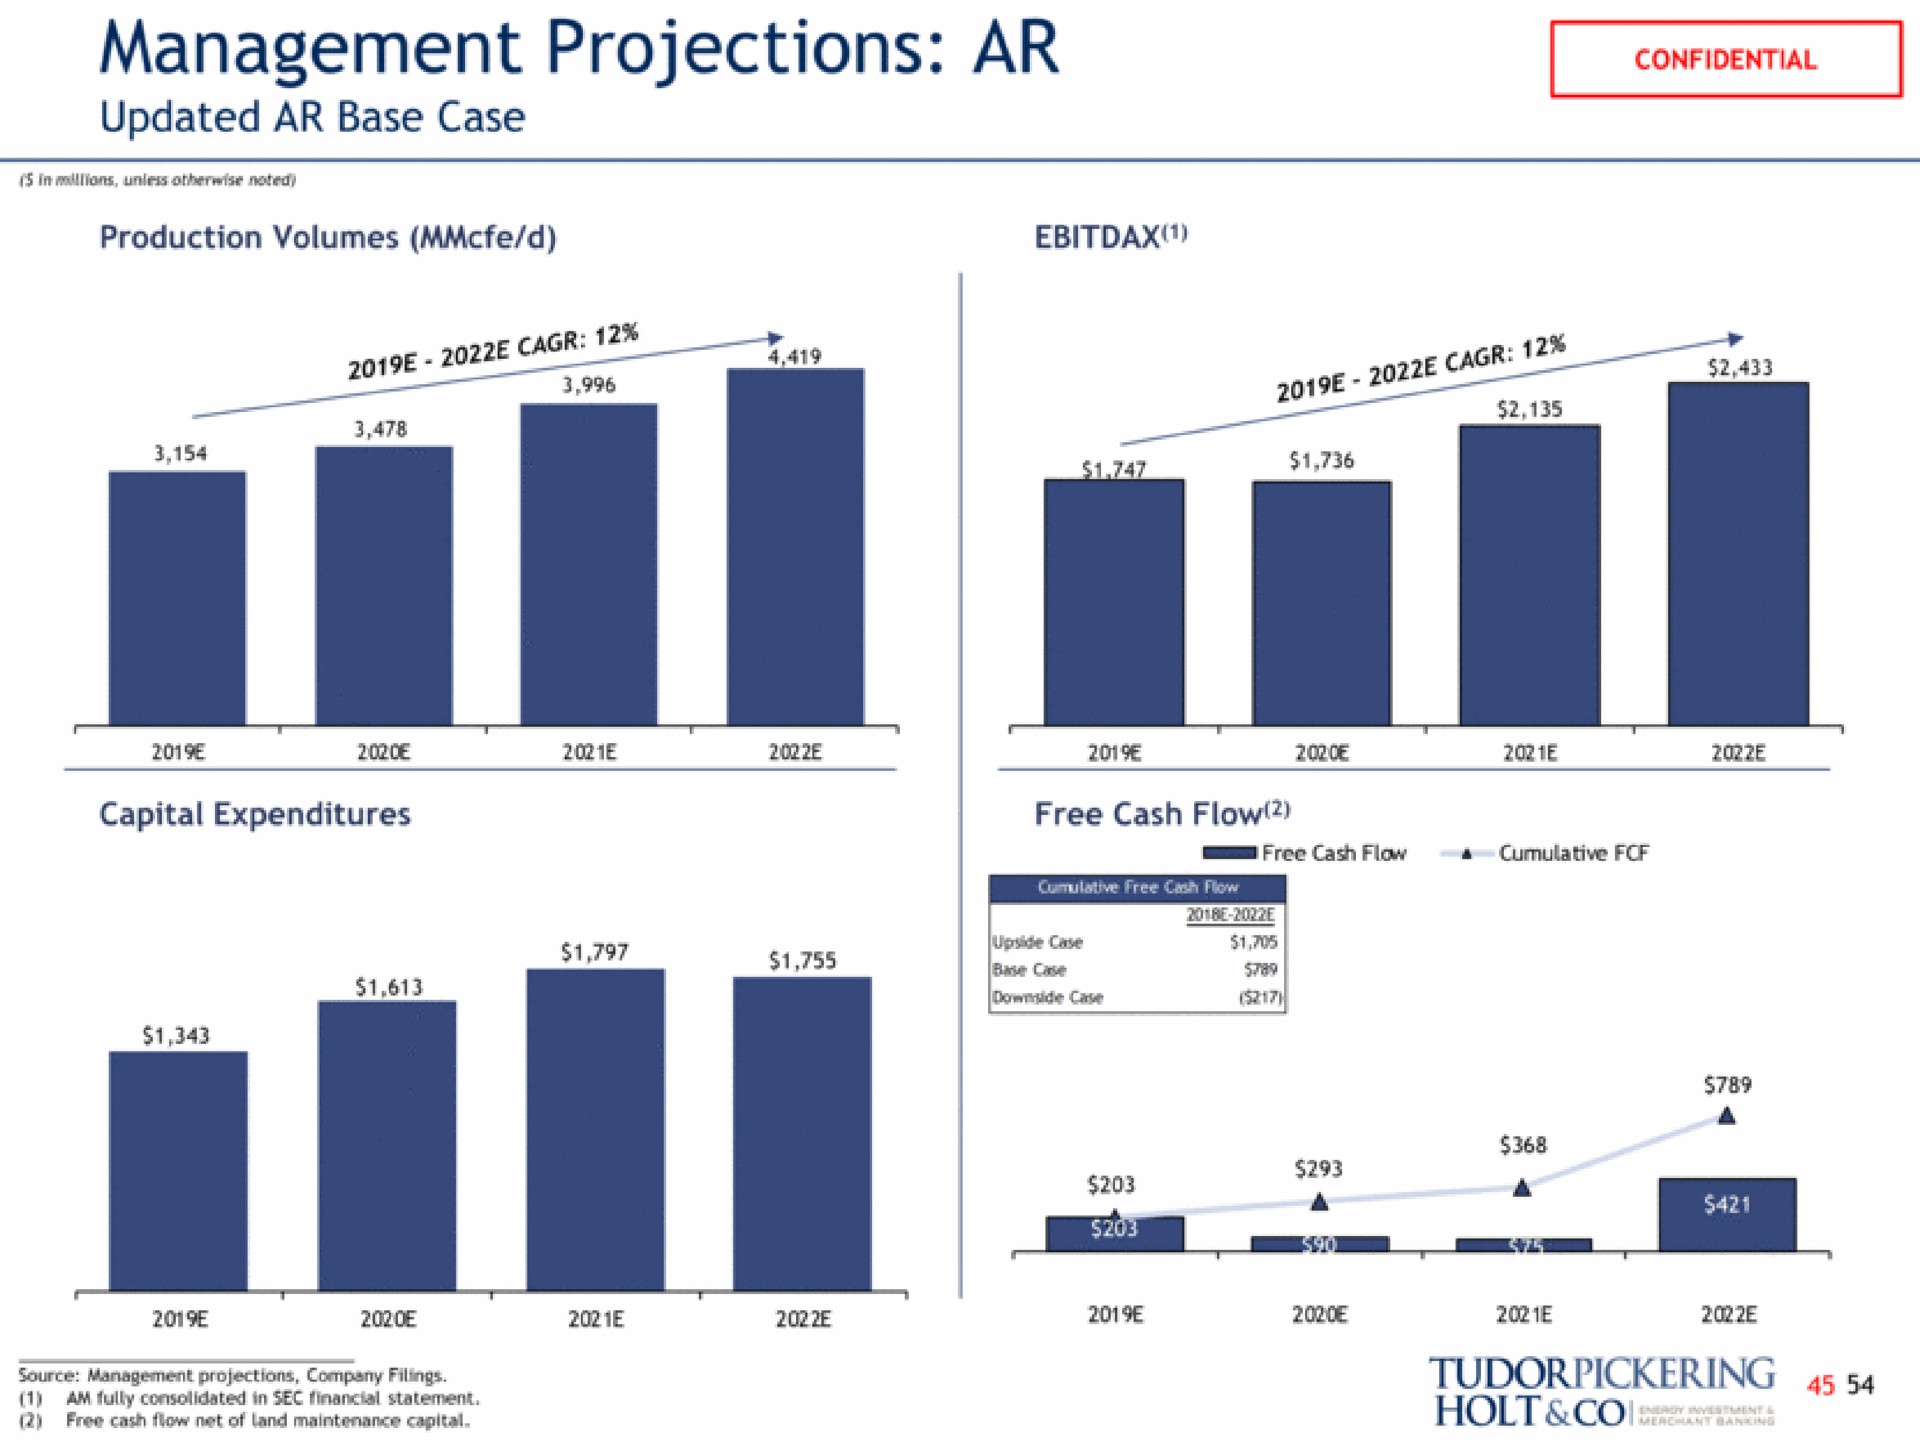 management projections updated base case holt | Tudor, Pickering, Holt & Co